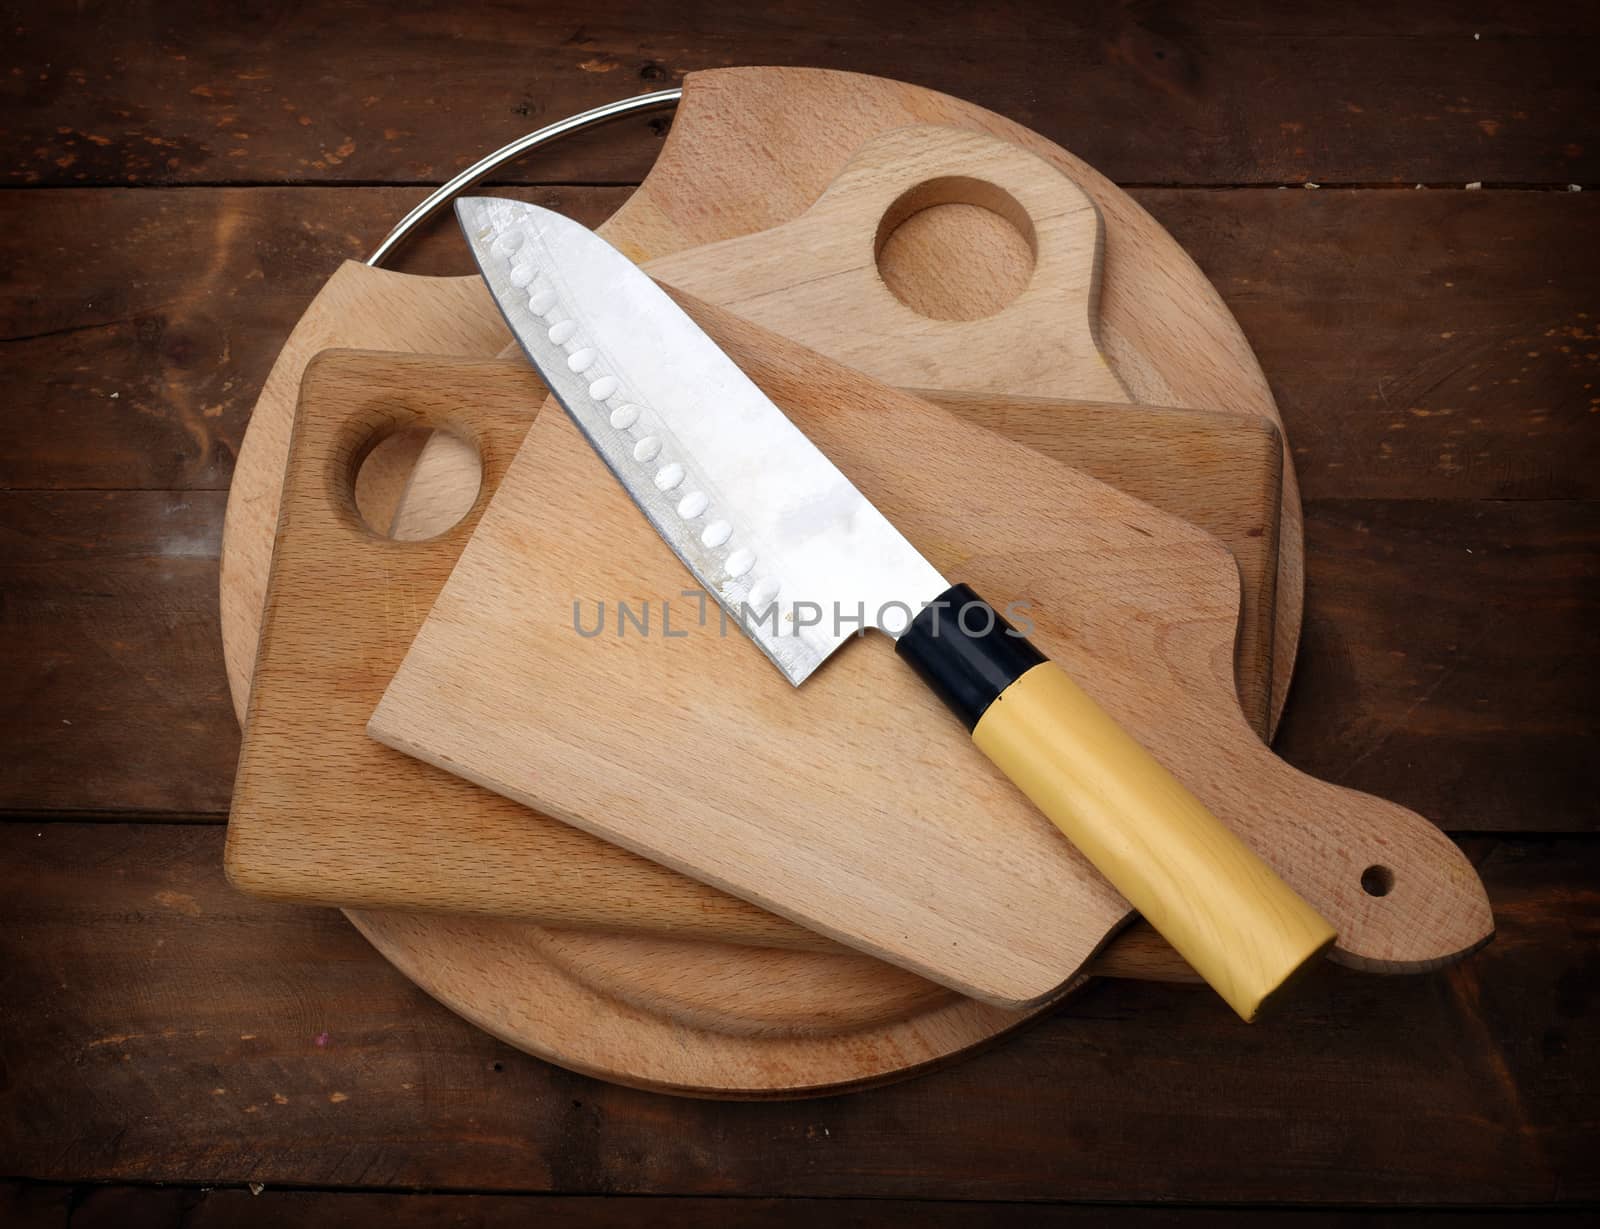  kitchen knife on stack of kitchen planks